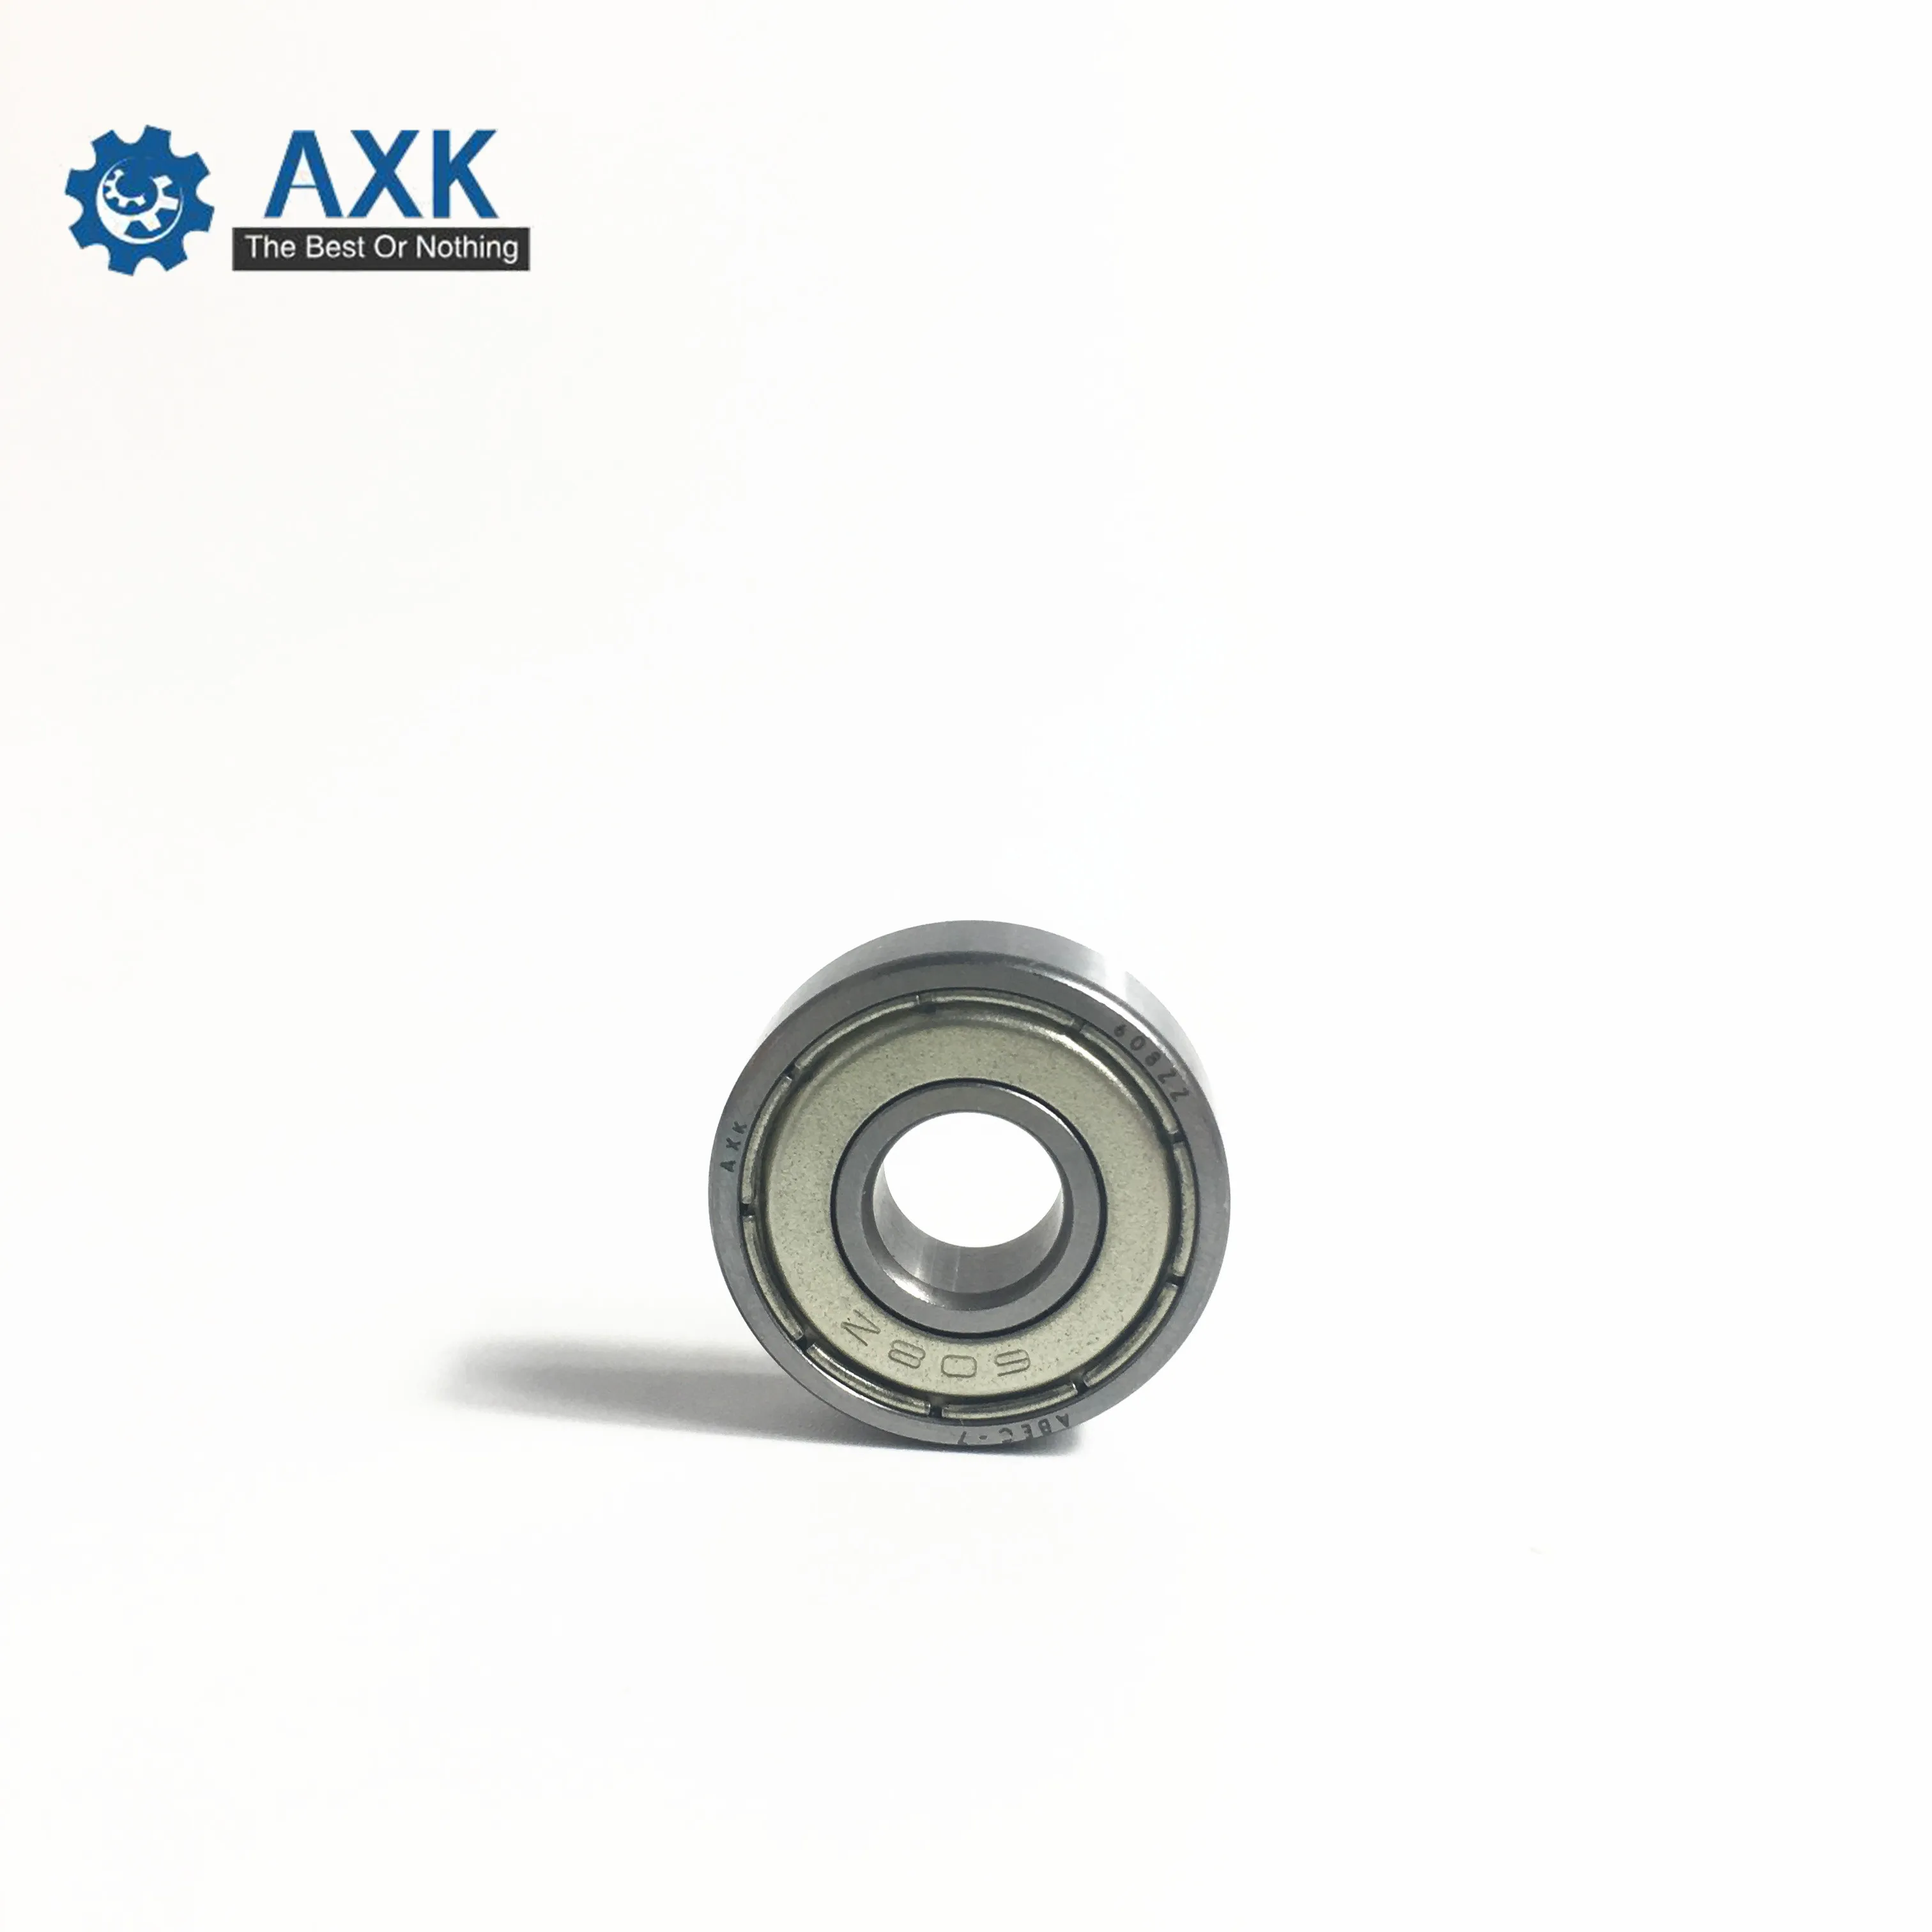 AXK 608zz 623zz 624zz 625zz 635zz 626zz 688zz (10 шт.) детали для 3D принтеров радиальный